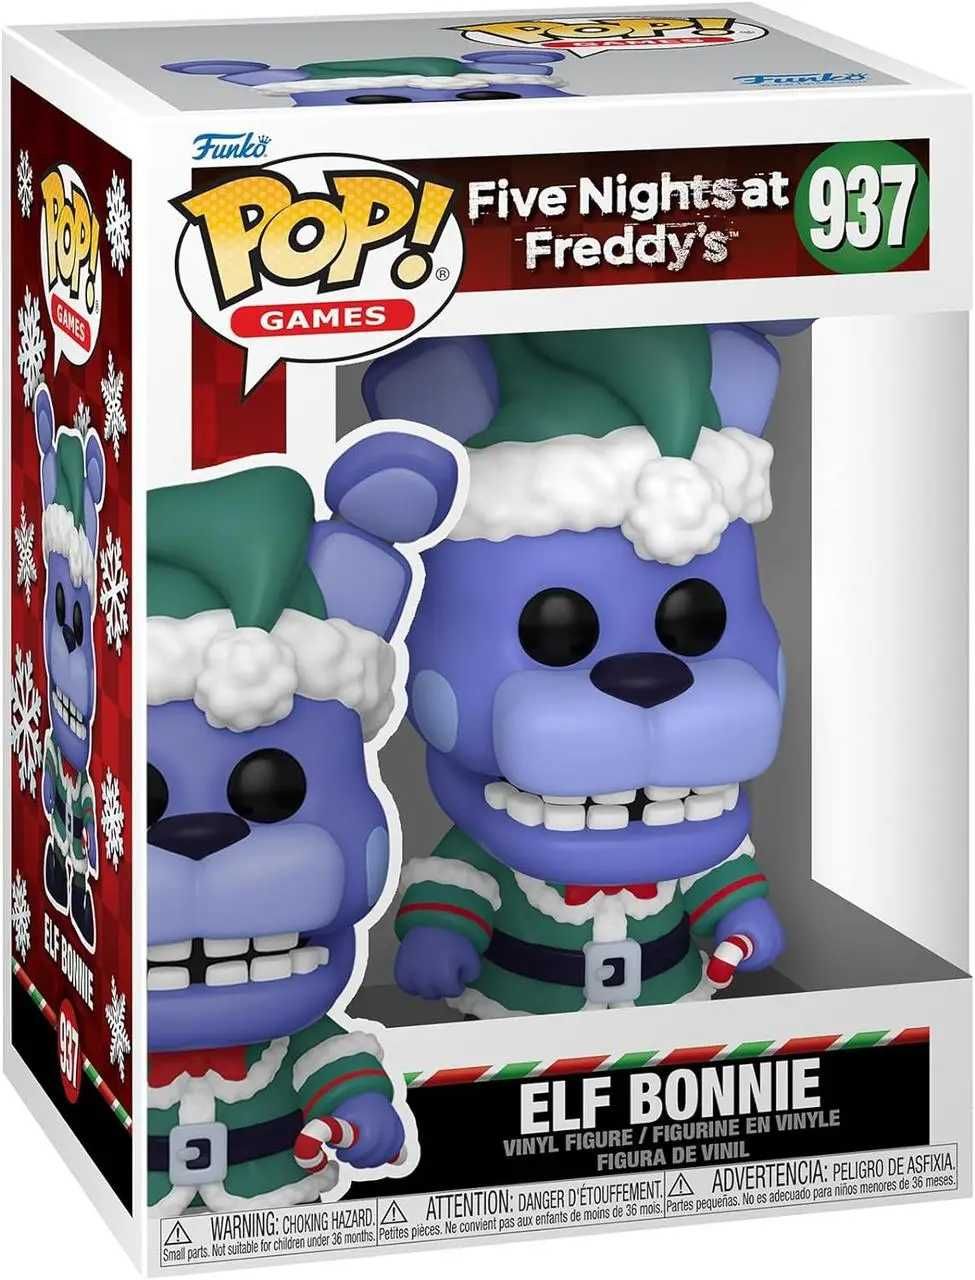 Фанко Эльф Бонни Funko Pop Five Nights at Freddy's Holiday Elf Bonnie